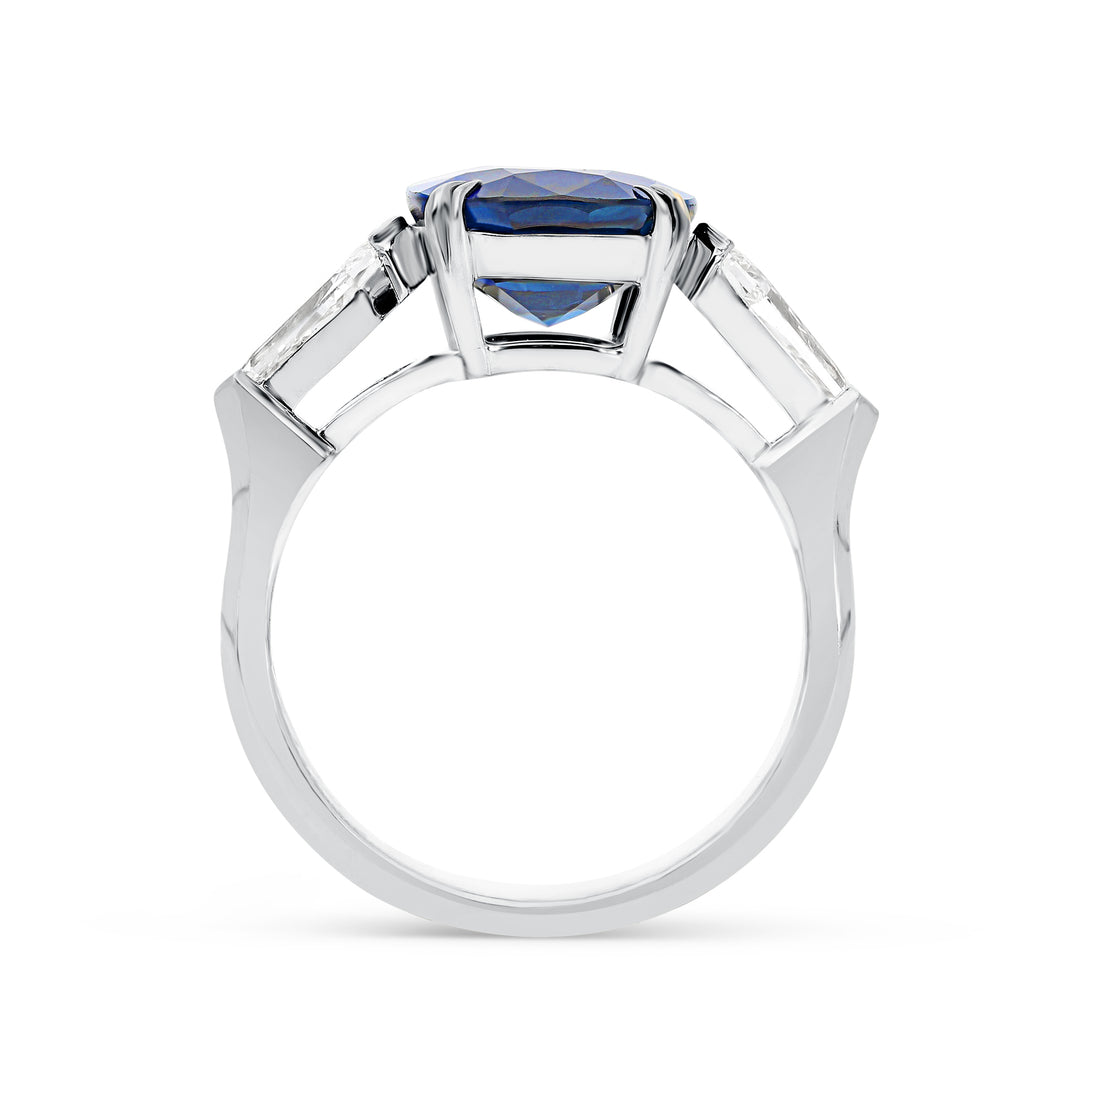 Blue Sapphire Birthstone Ring - 6.2 Carat